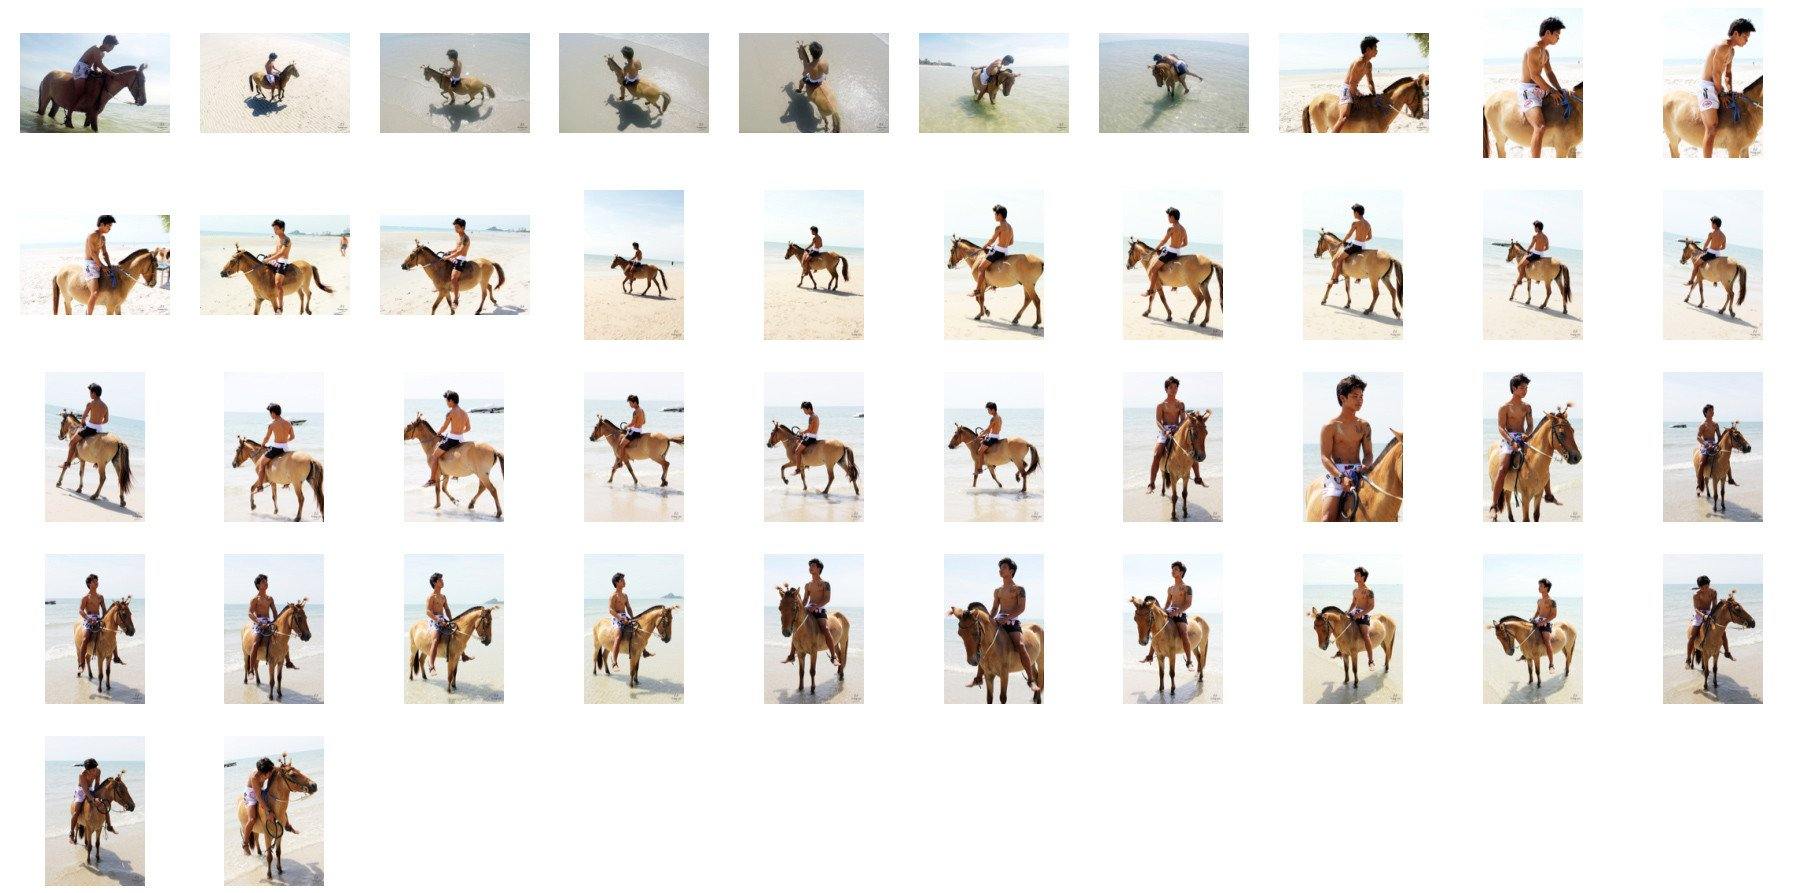 David in Thaibox Shorts Riding Bareback on Golden Pony, Part 1 - Riding.Vision